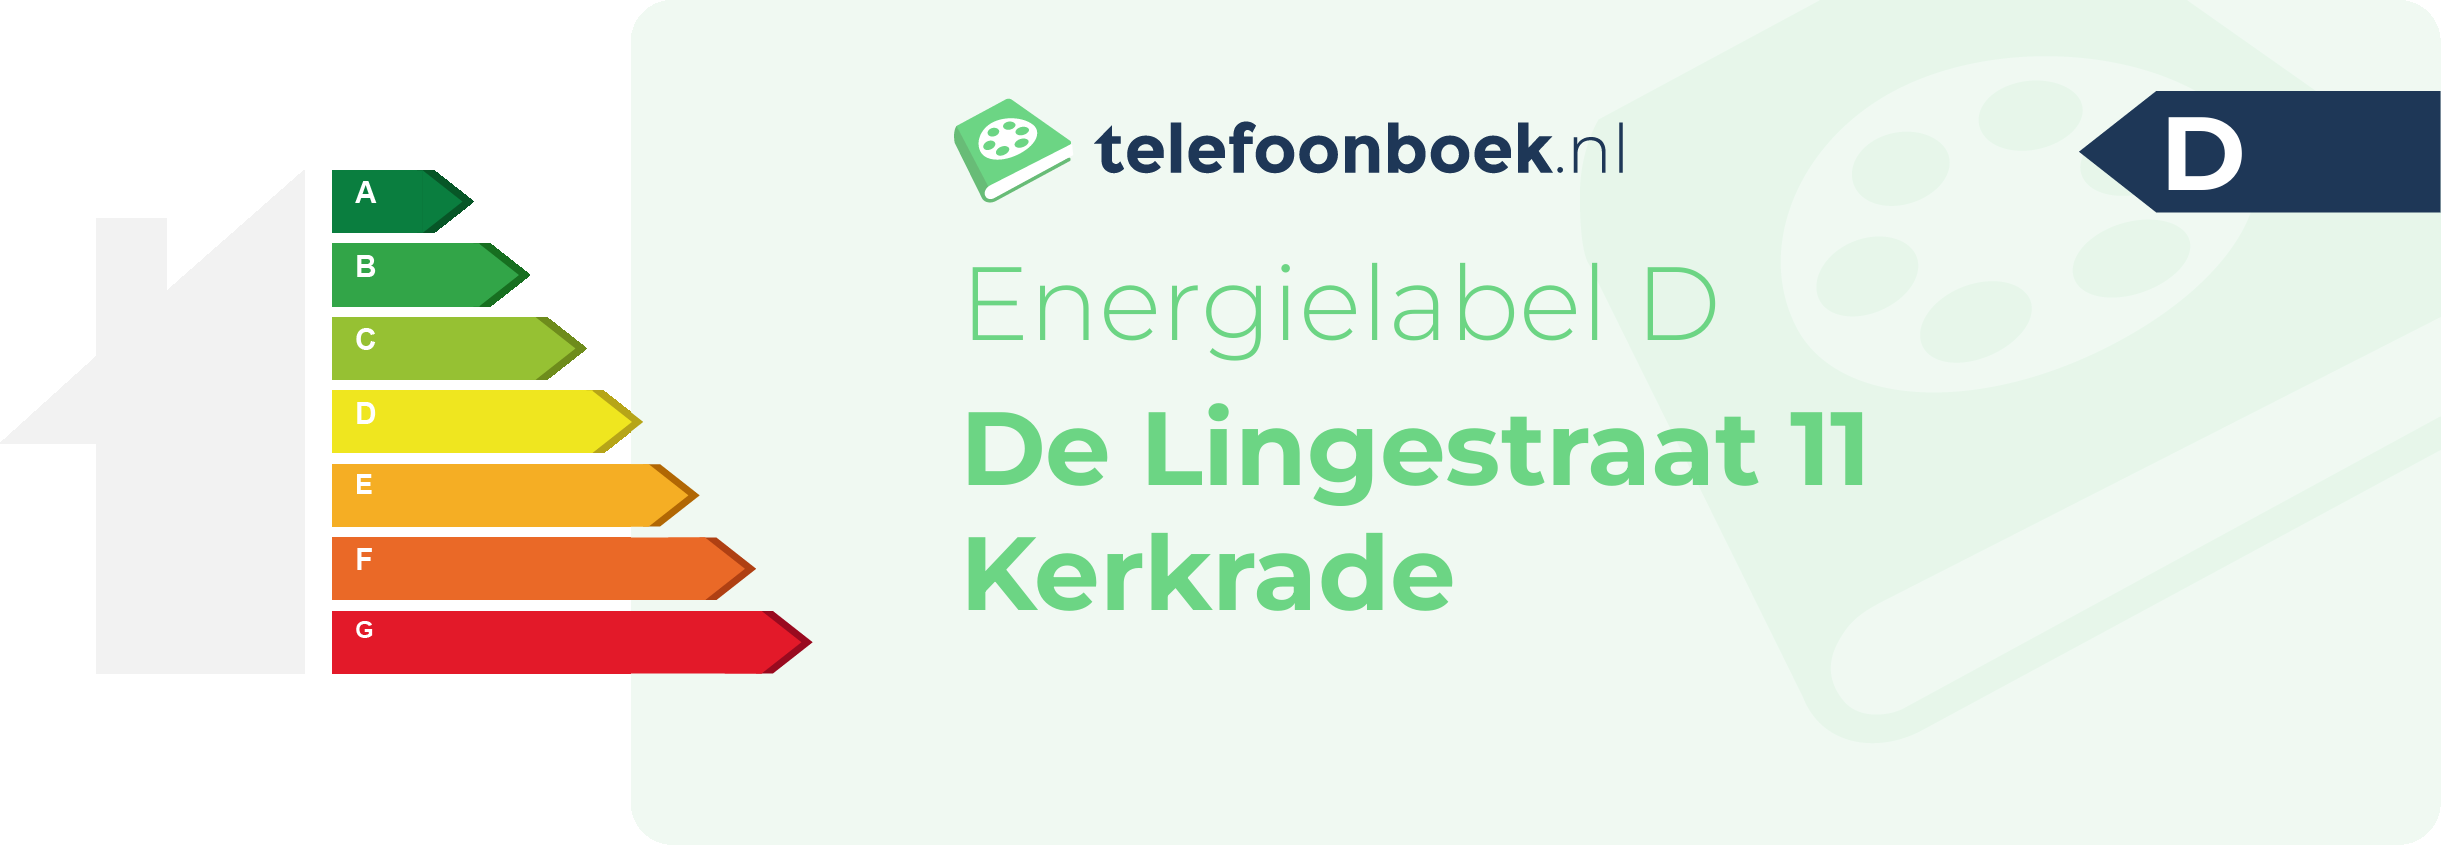 Energielabel De Lingestraat 11 Kerkrade